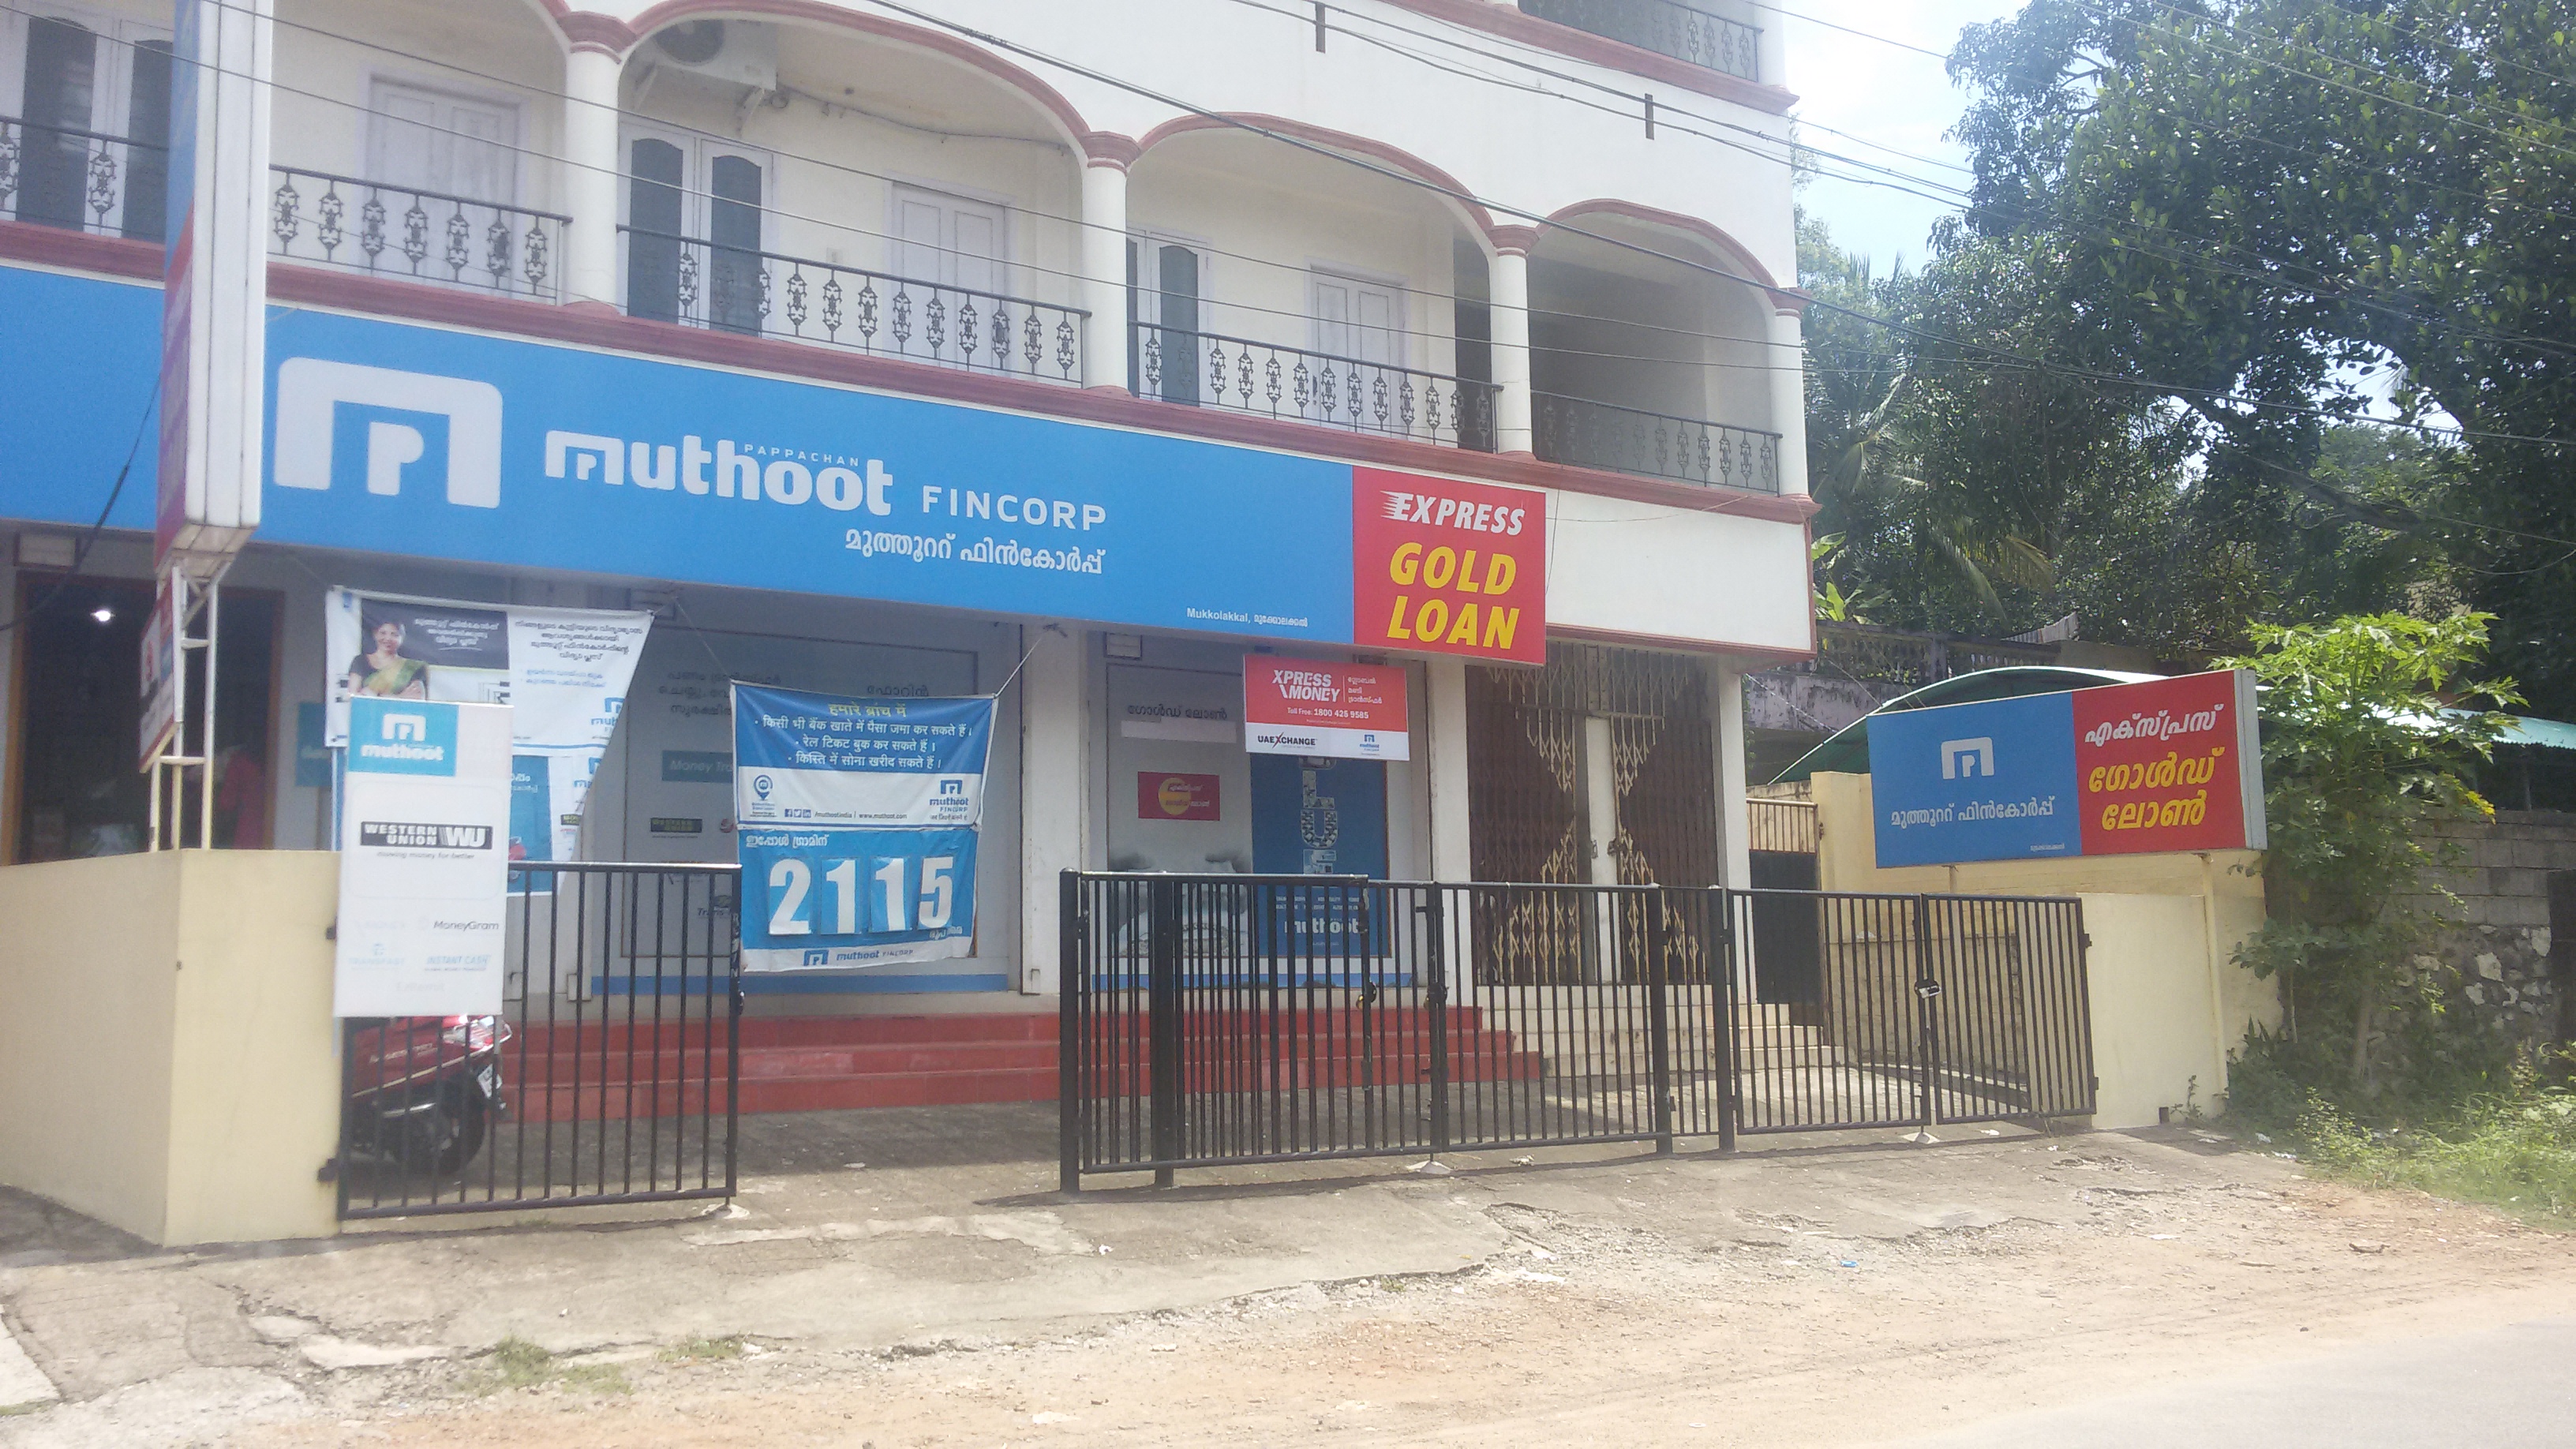 Muthoot Fincorp Gold Loan Services in Mukkola, Thiruvananthapuram, Kerala